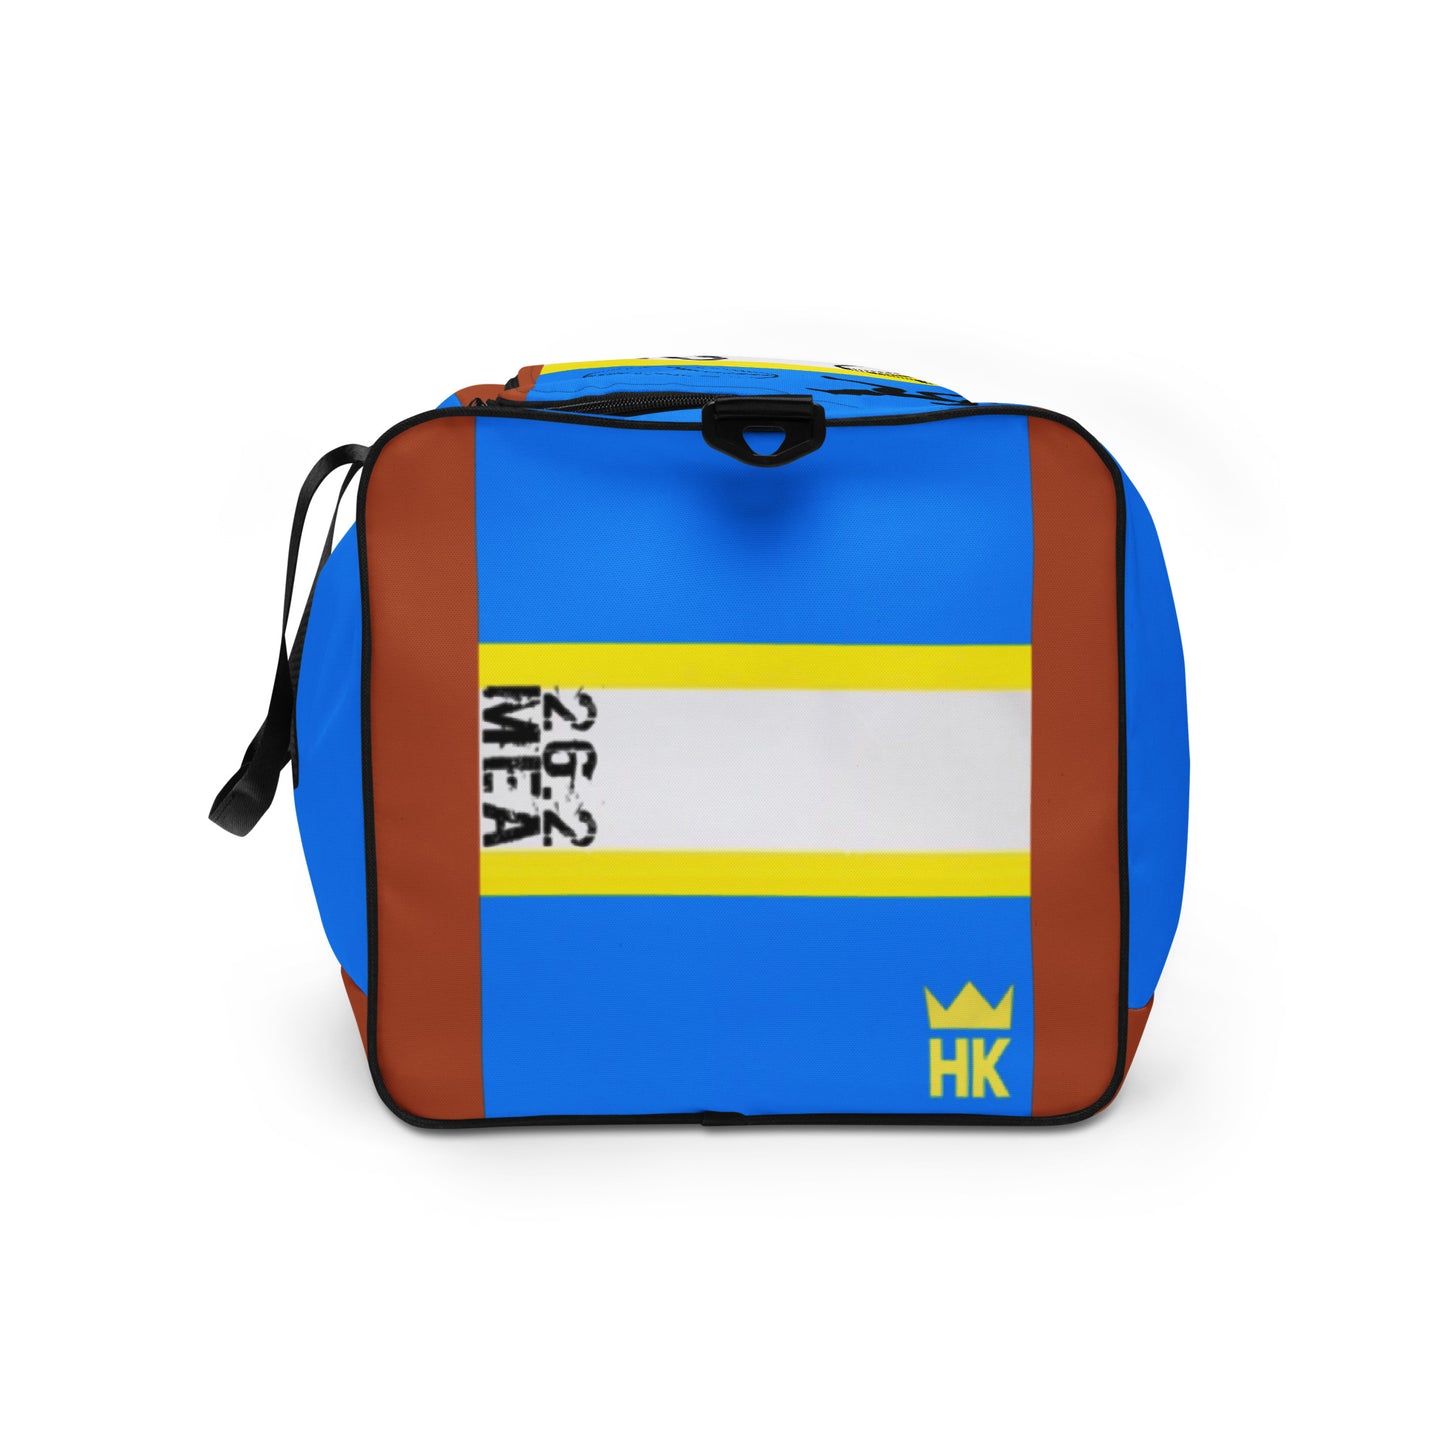 H & K MEA 26.2 Duffle bag